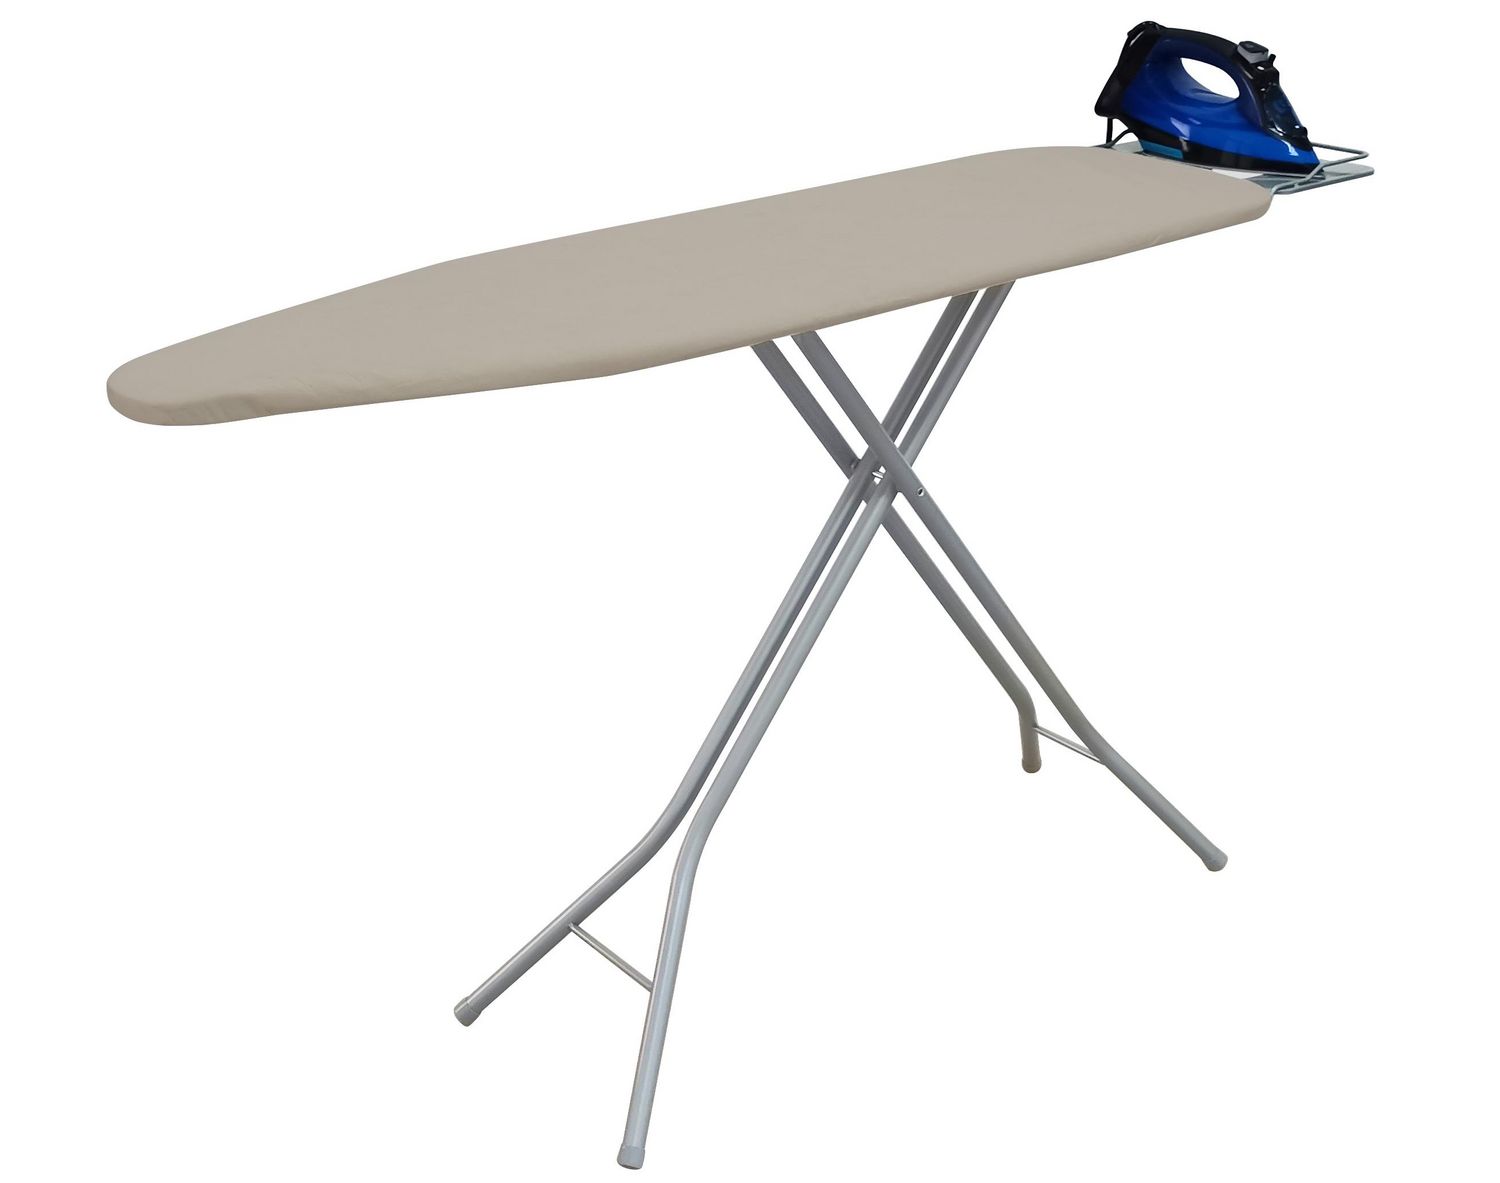 4-Leg Steel Mesh Top Adjustable Ironing Board